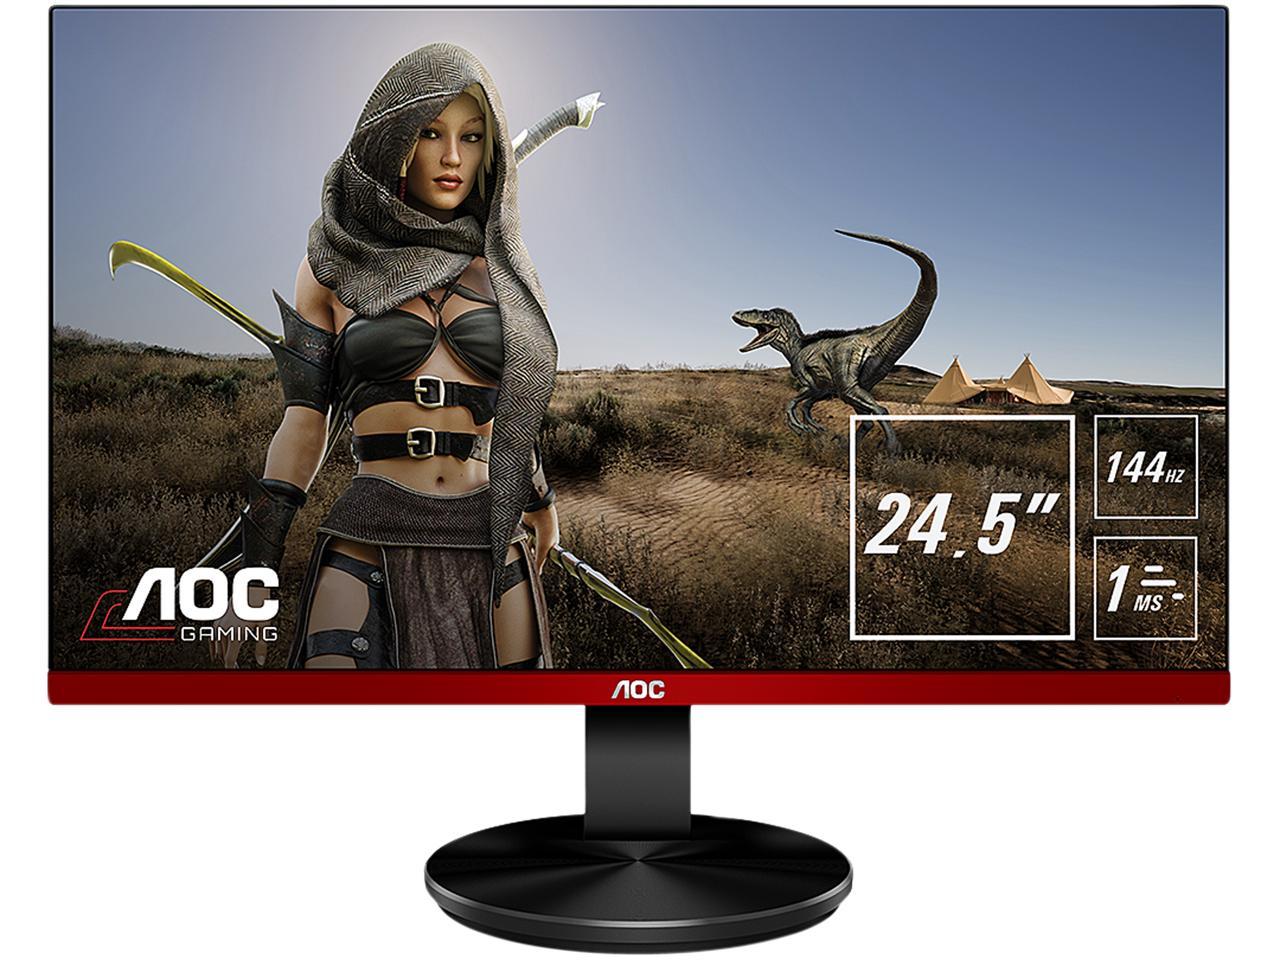 Aoc G2590fx 25 24 5 Viewable Frameless Gaming Monitor Full Hd 19 X 1080 1ms 144hz G Sync Compatible Amd Freesync 96 Srgb Coverage Low Input Lag Displayport Hdmi Vga Vesa Newegg Com